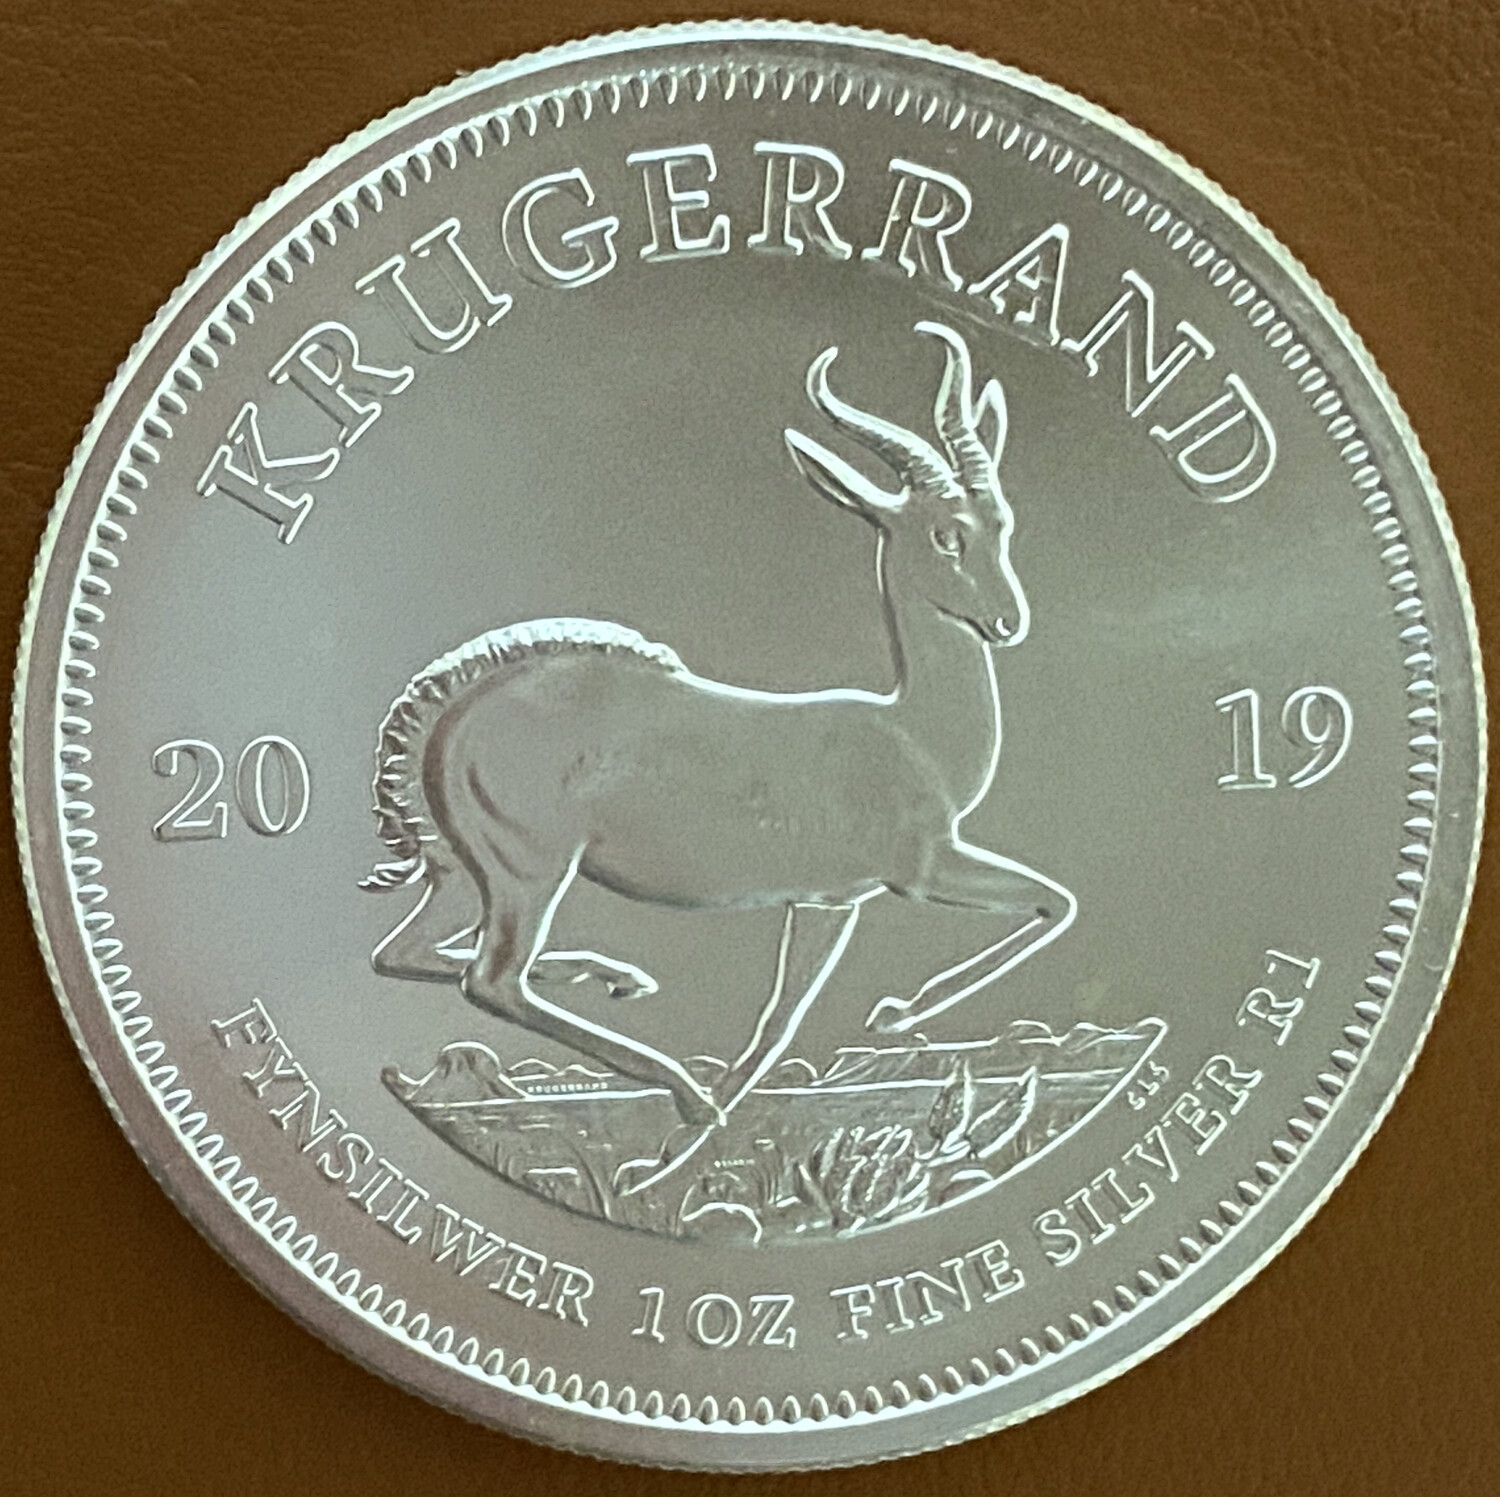 1 Oz Silver South Africa - Krugerrand